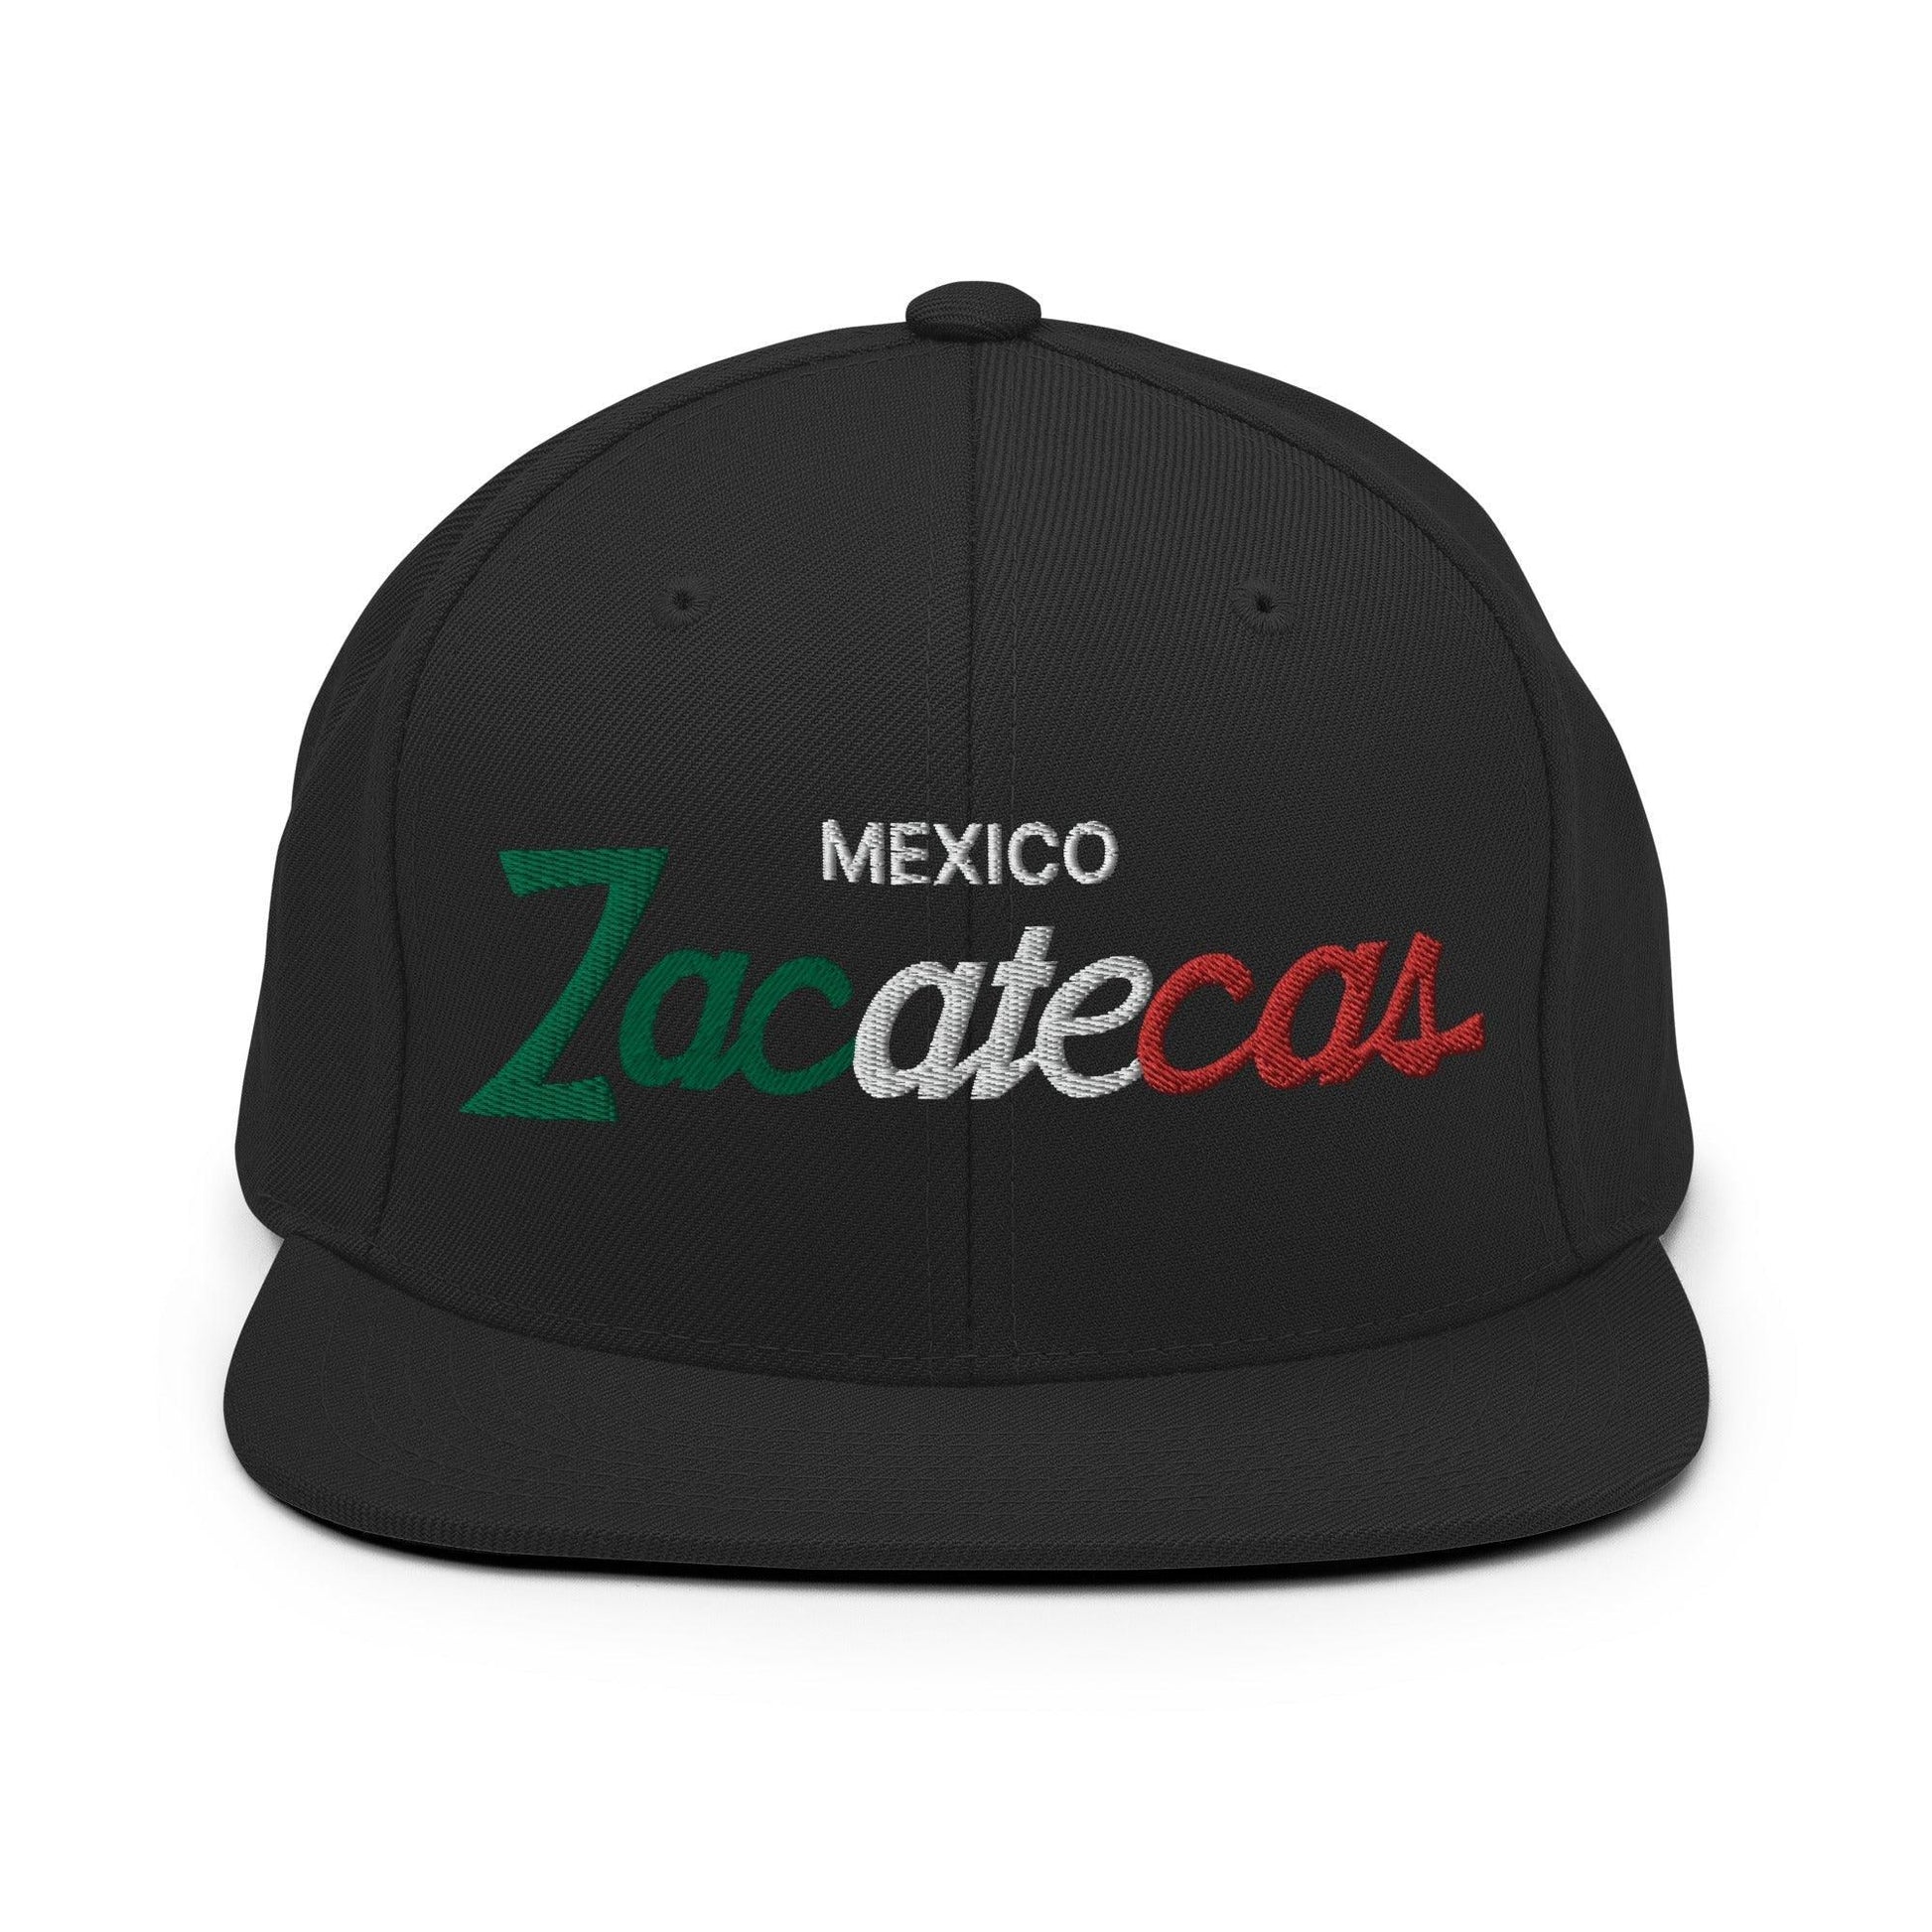 Zacatecas Mexico Vintage Sports Script Snapback Hat Black